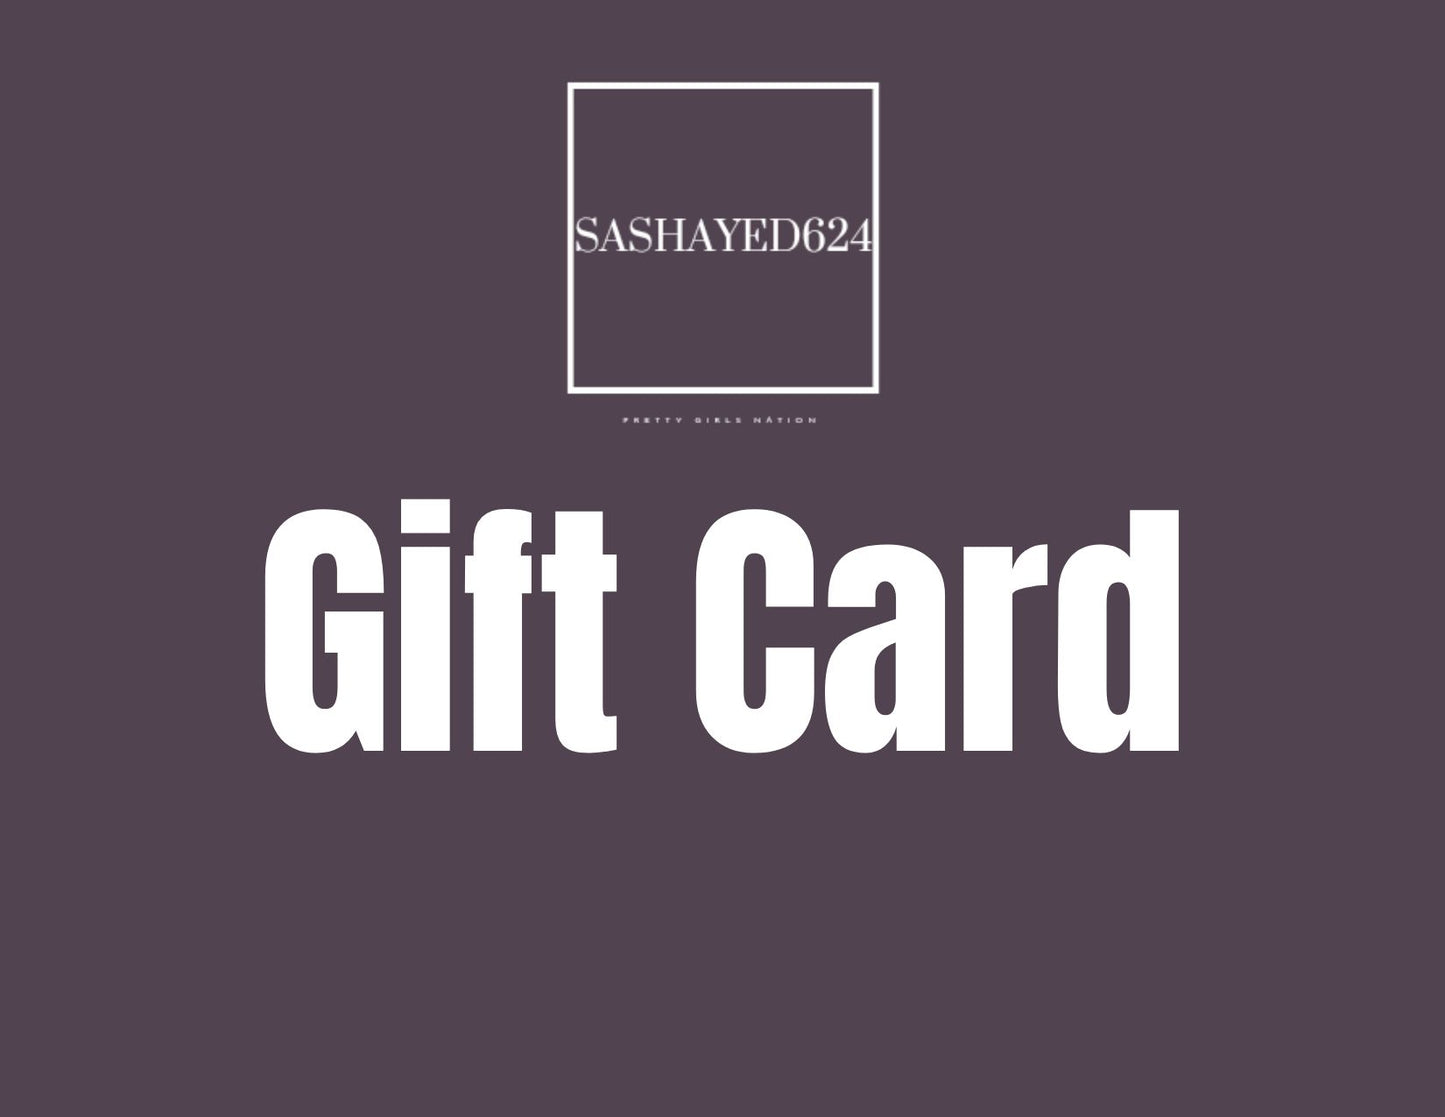 Sashayed624 gift card